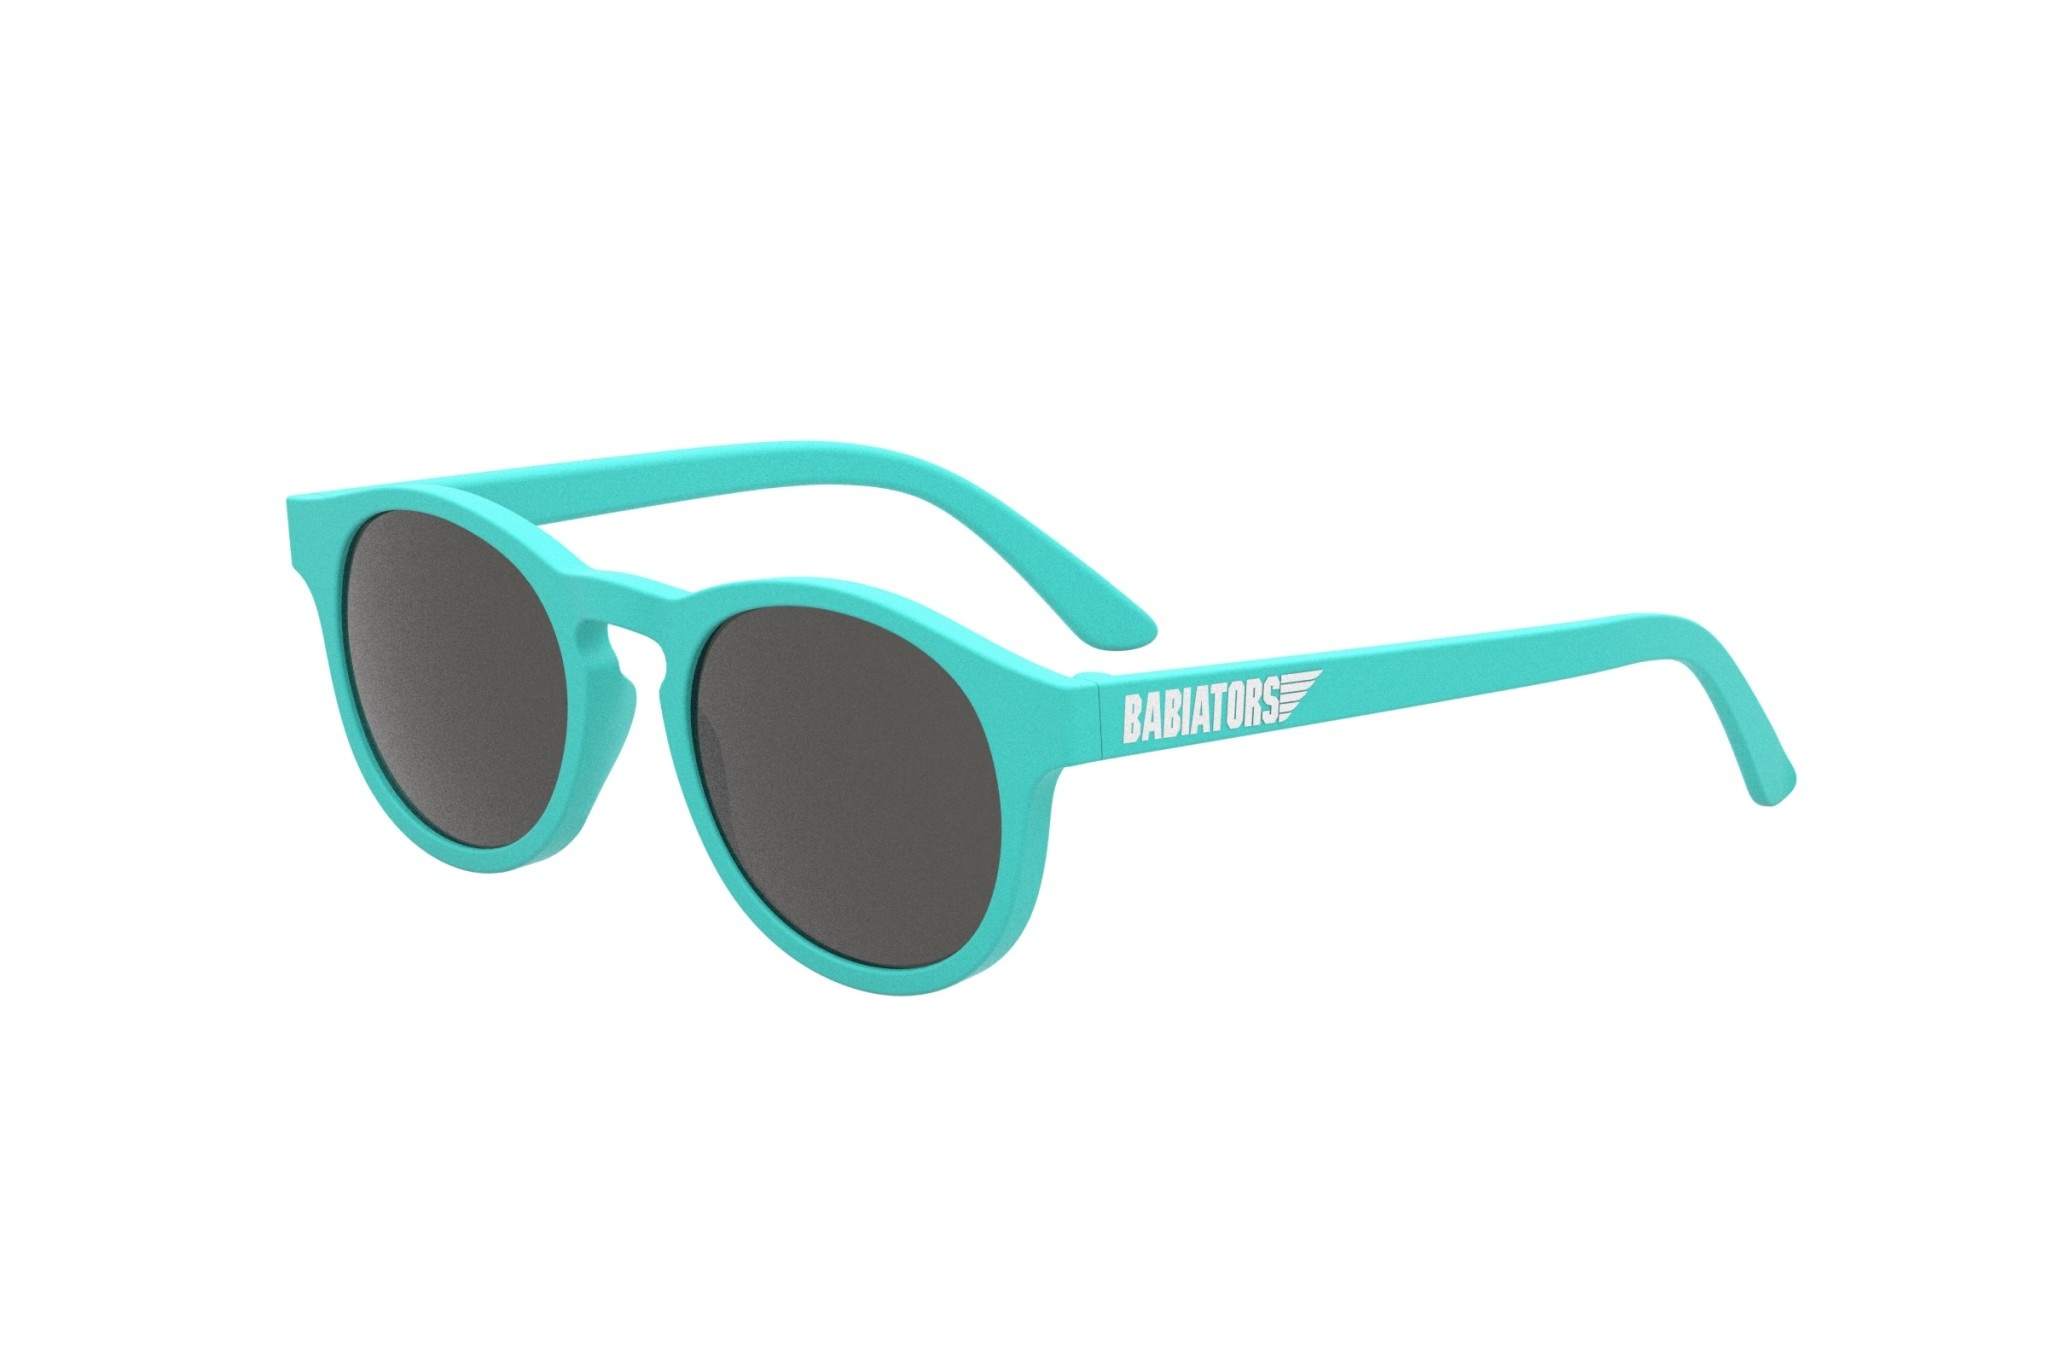 Keyhole Style Sunglasses - Totally Turquoise